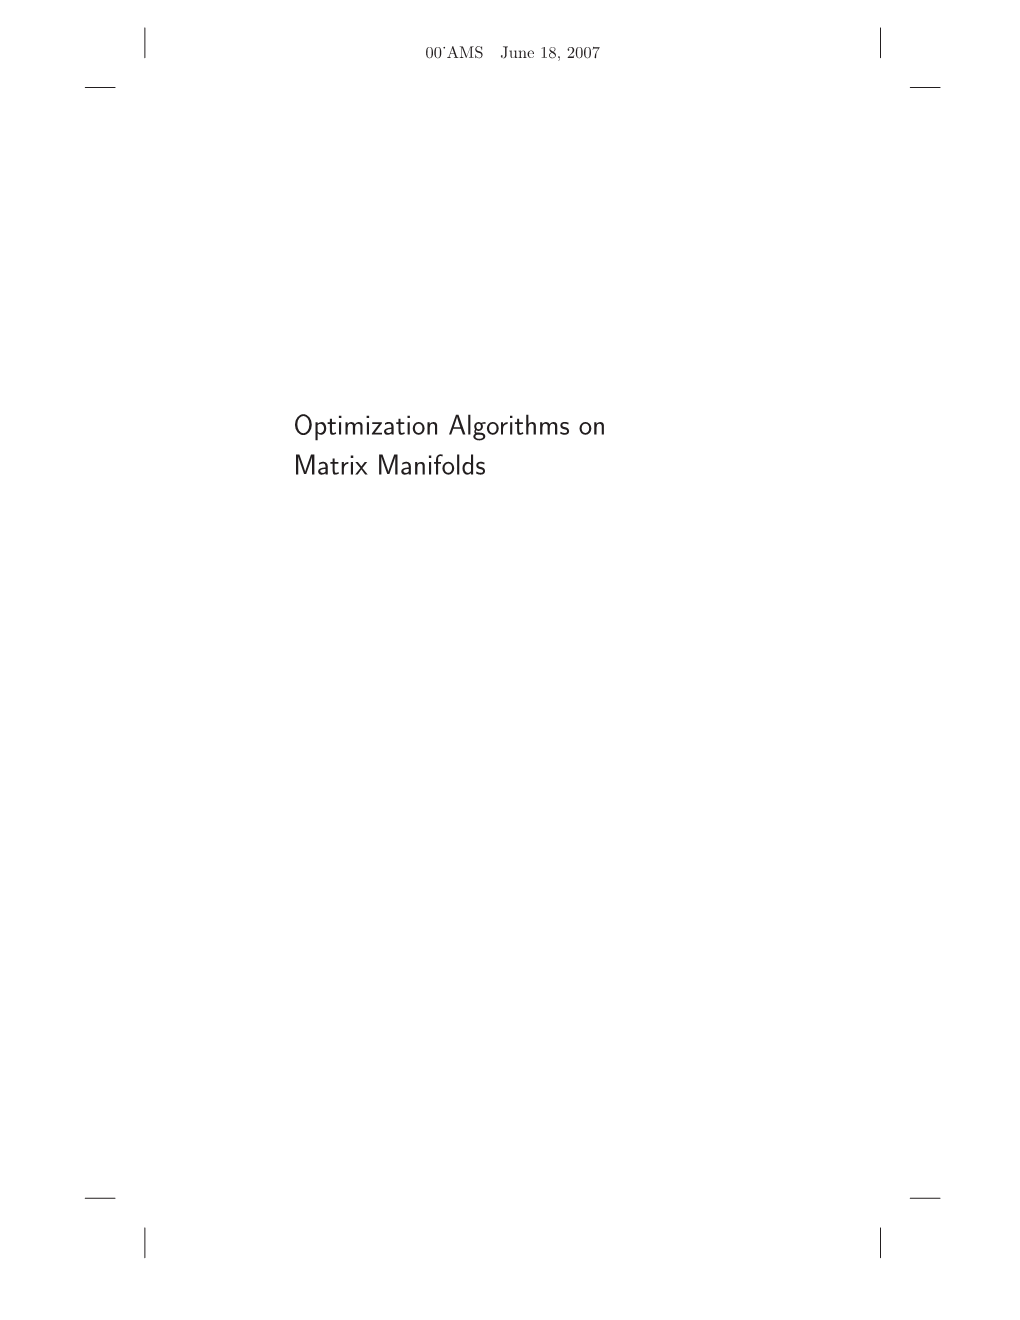 Optimization Algorithms on Matrix Manifolds 00˙AMS June 18, 2007 00˙AMS June 18, 2007